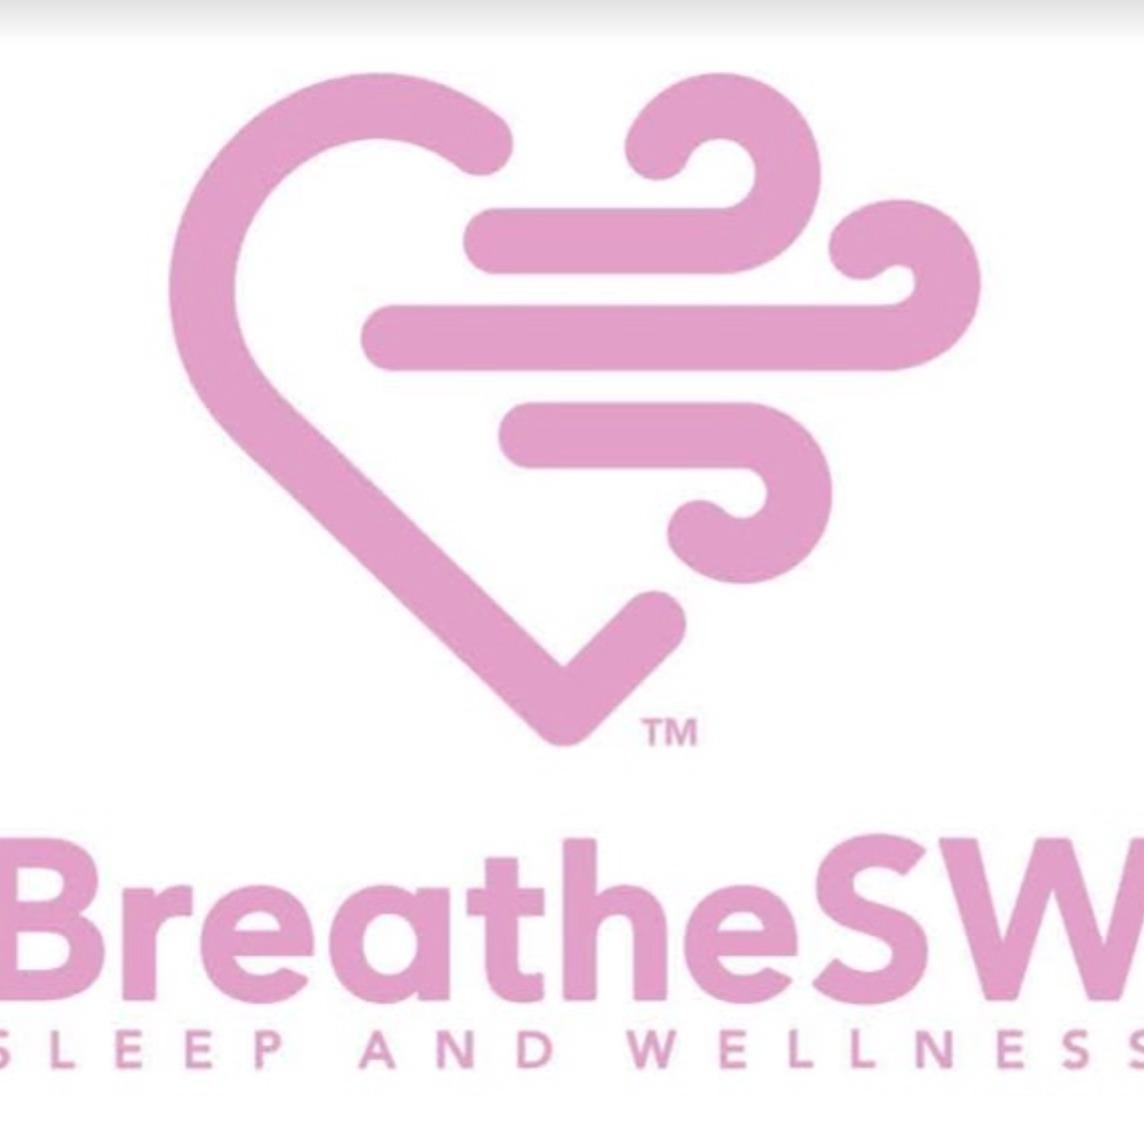 BreatheSW | Sleep & Wellness